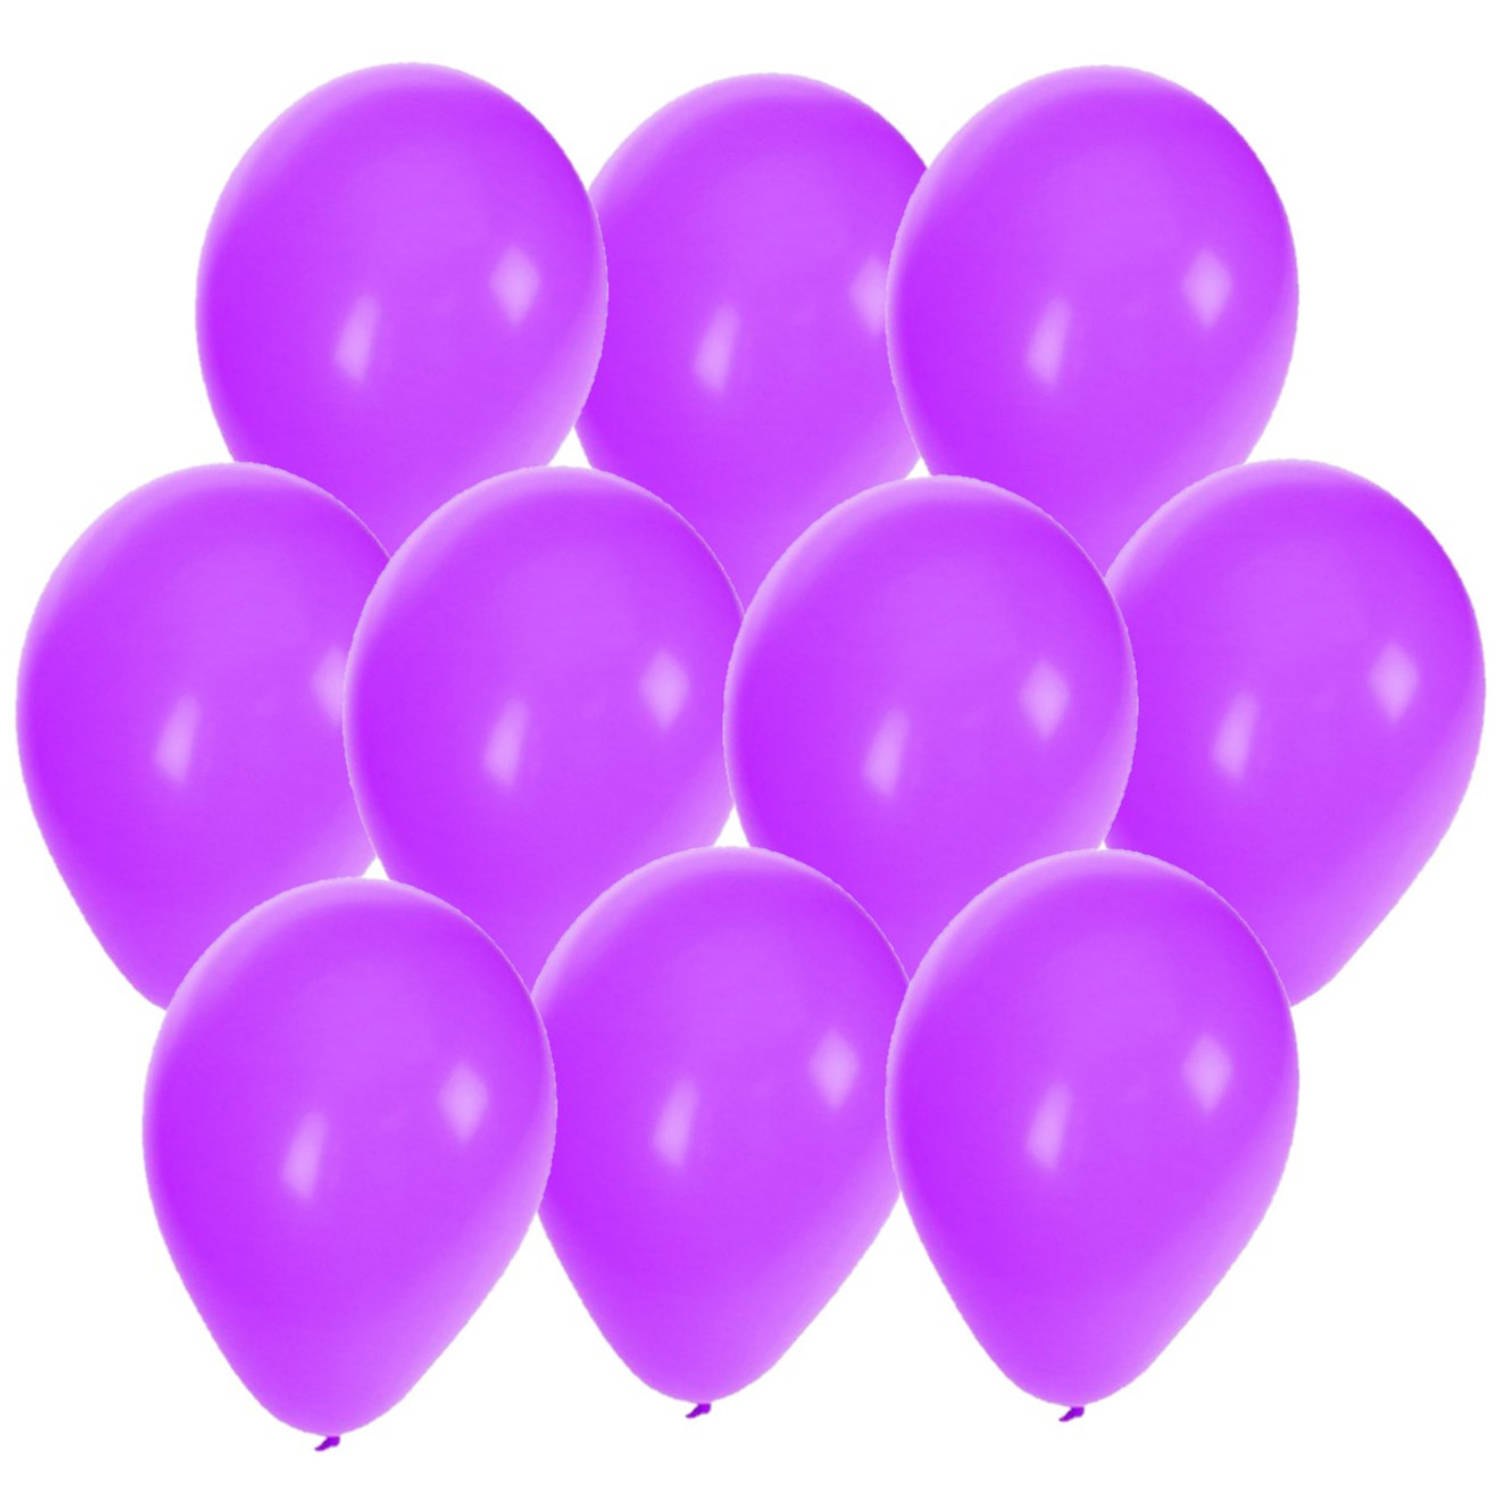 30x stuks Paarse party ballonnen 27 cm - Ballonnen